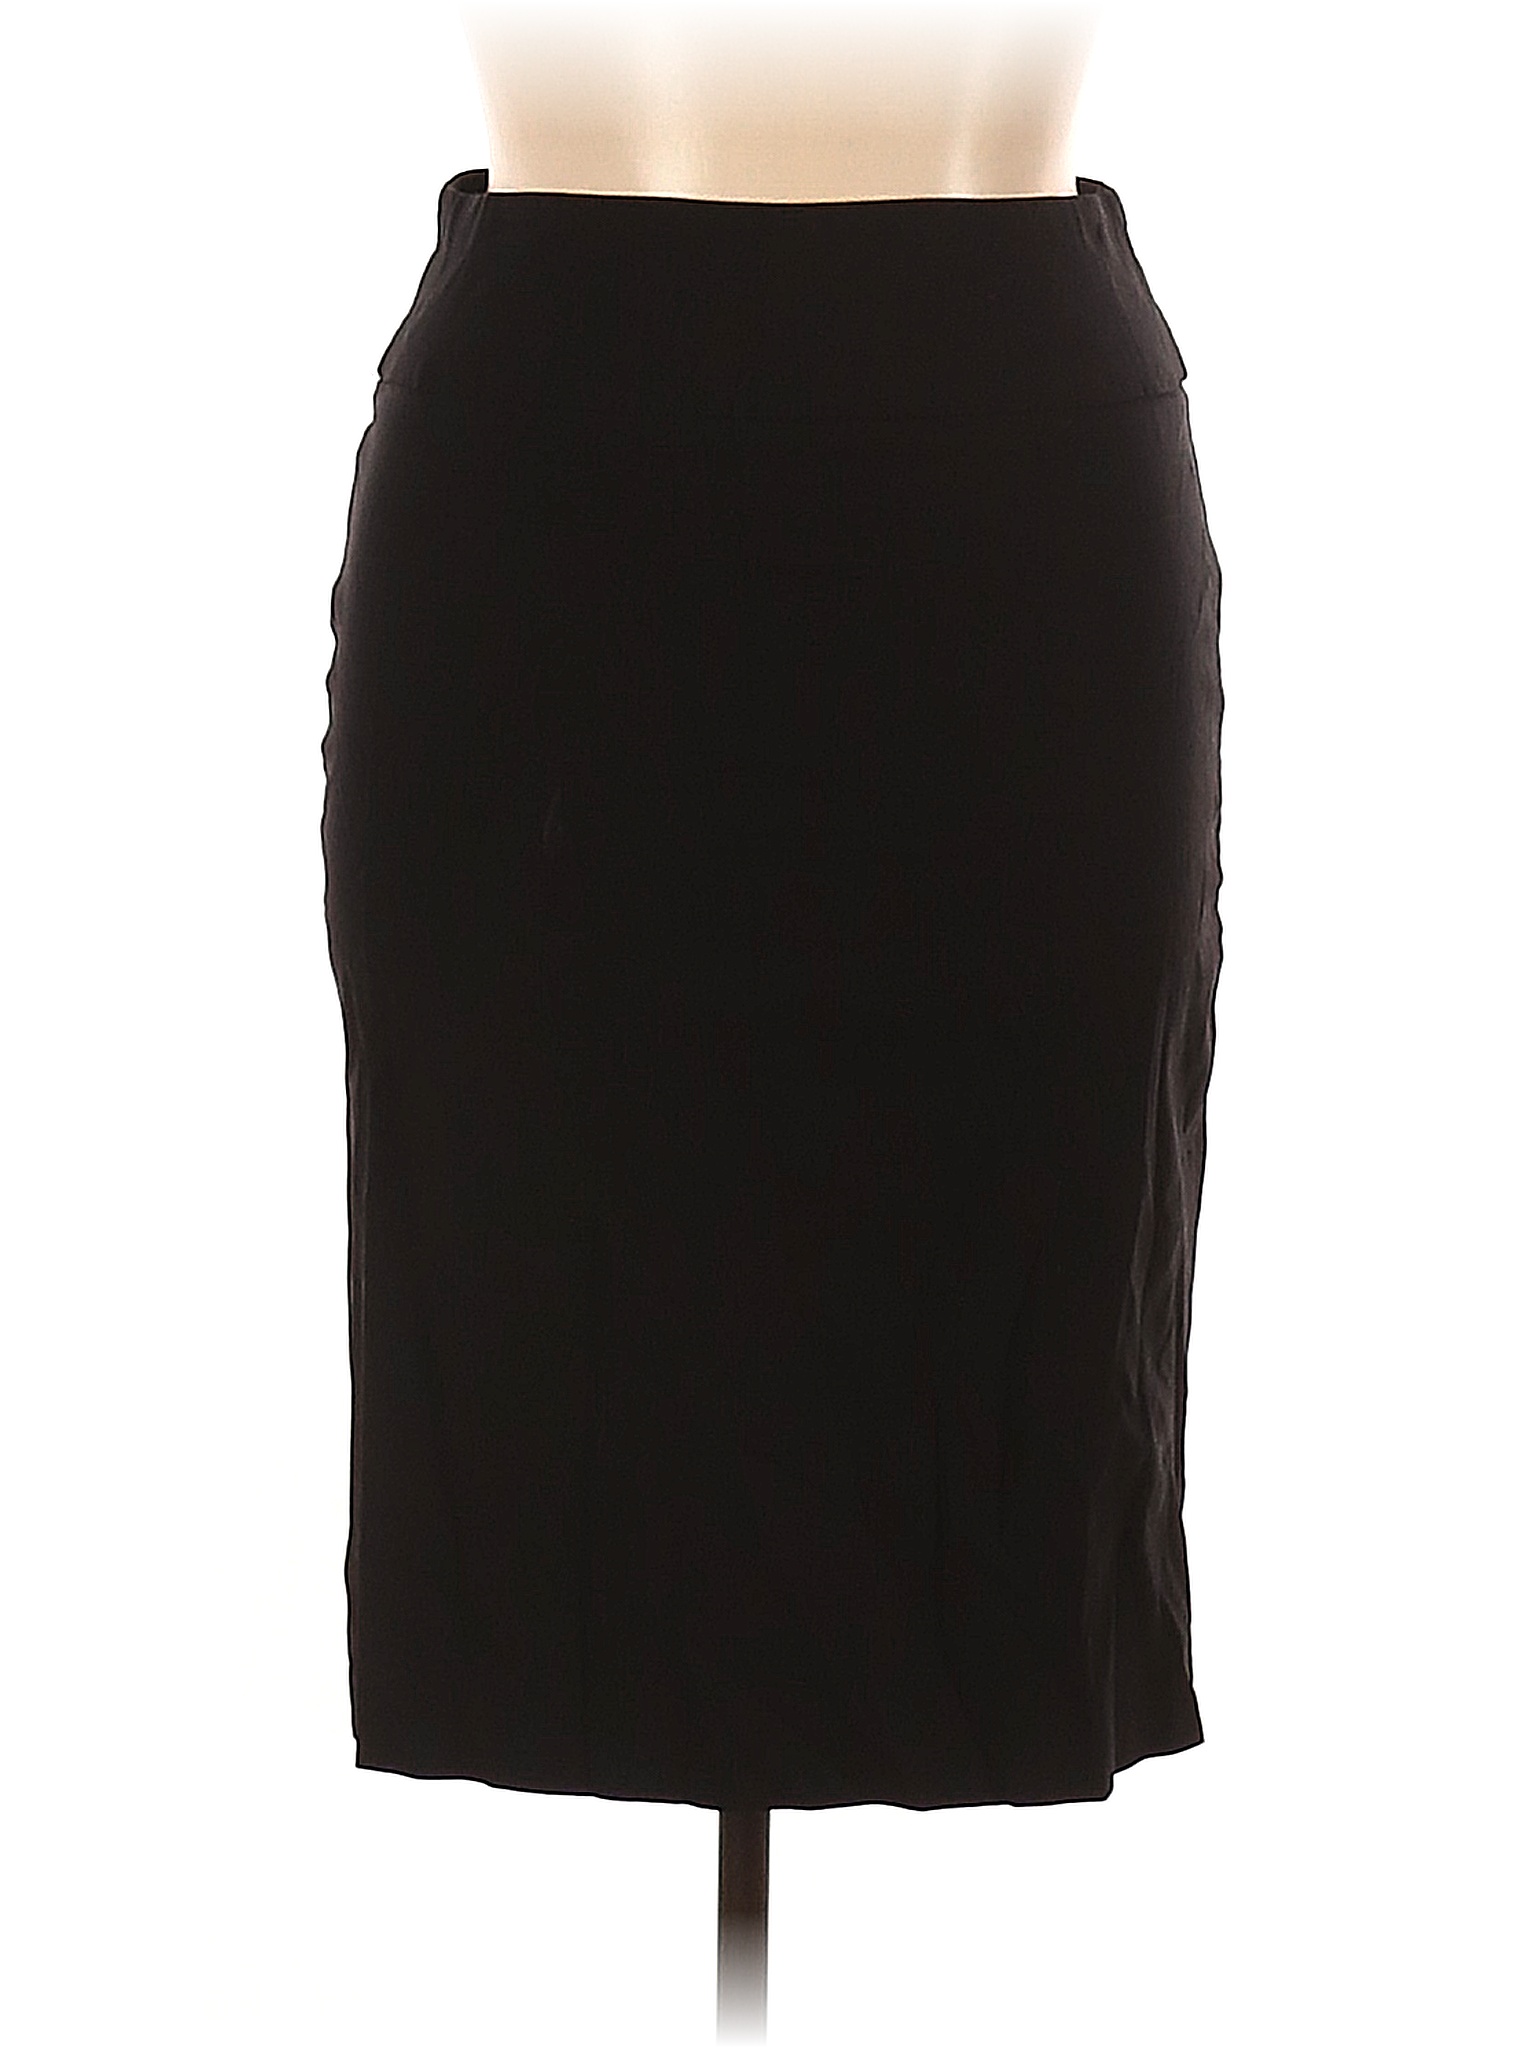 Ashley Stewart Solid Black Casual Skirt Size 14 (Plus) - 81% off | thredUP